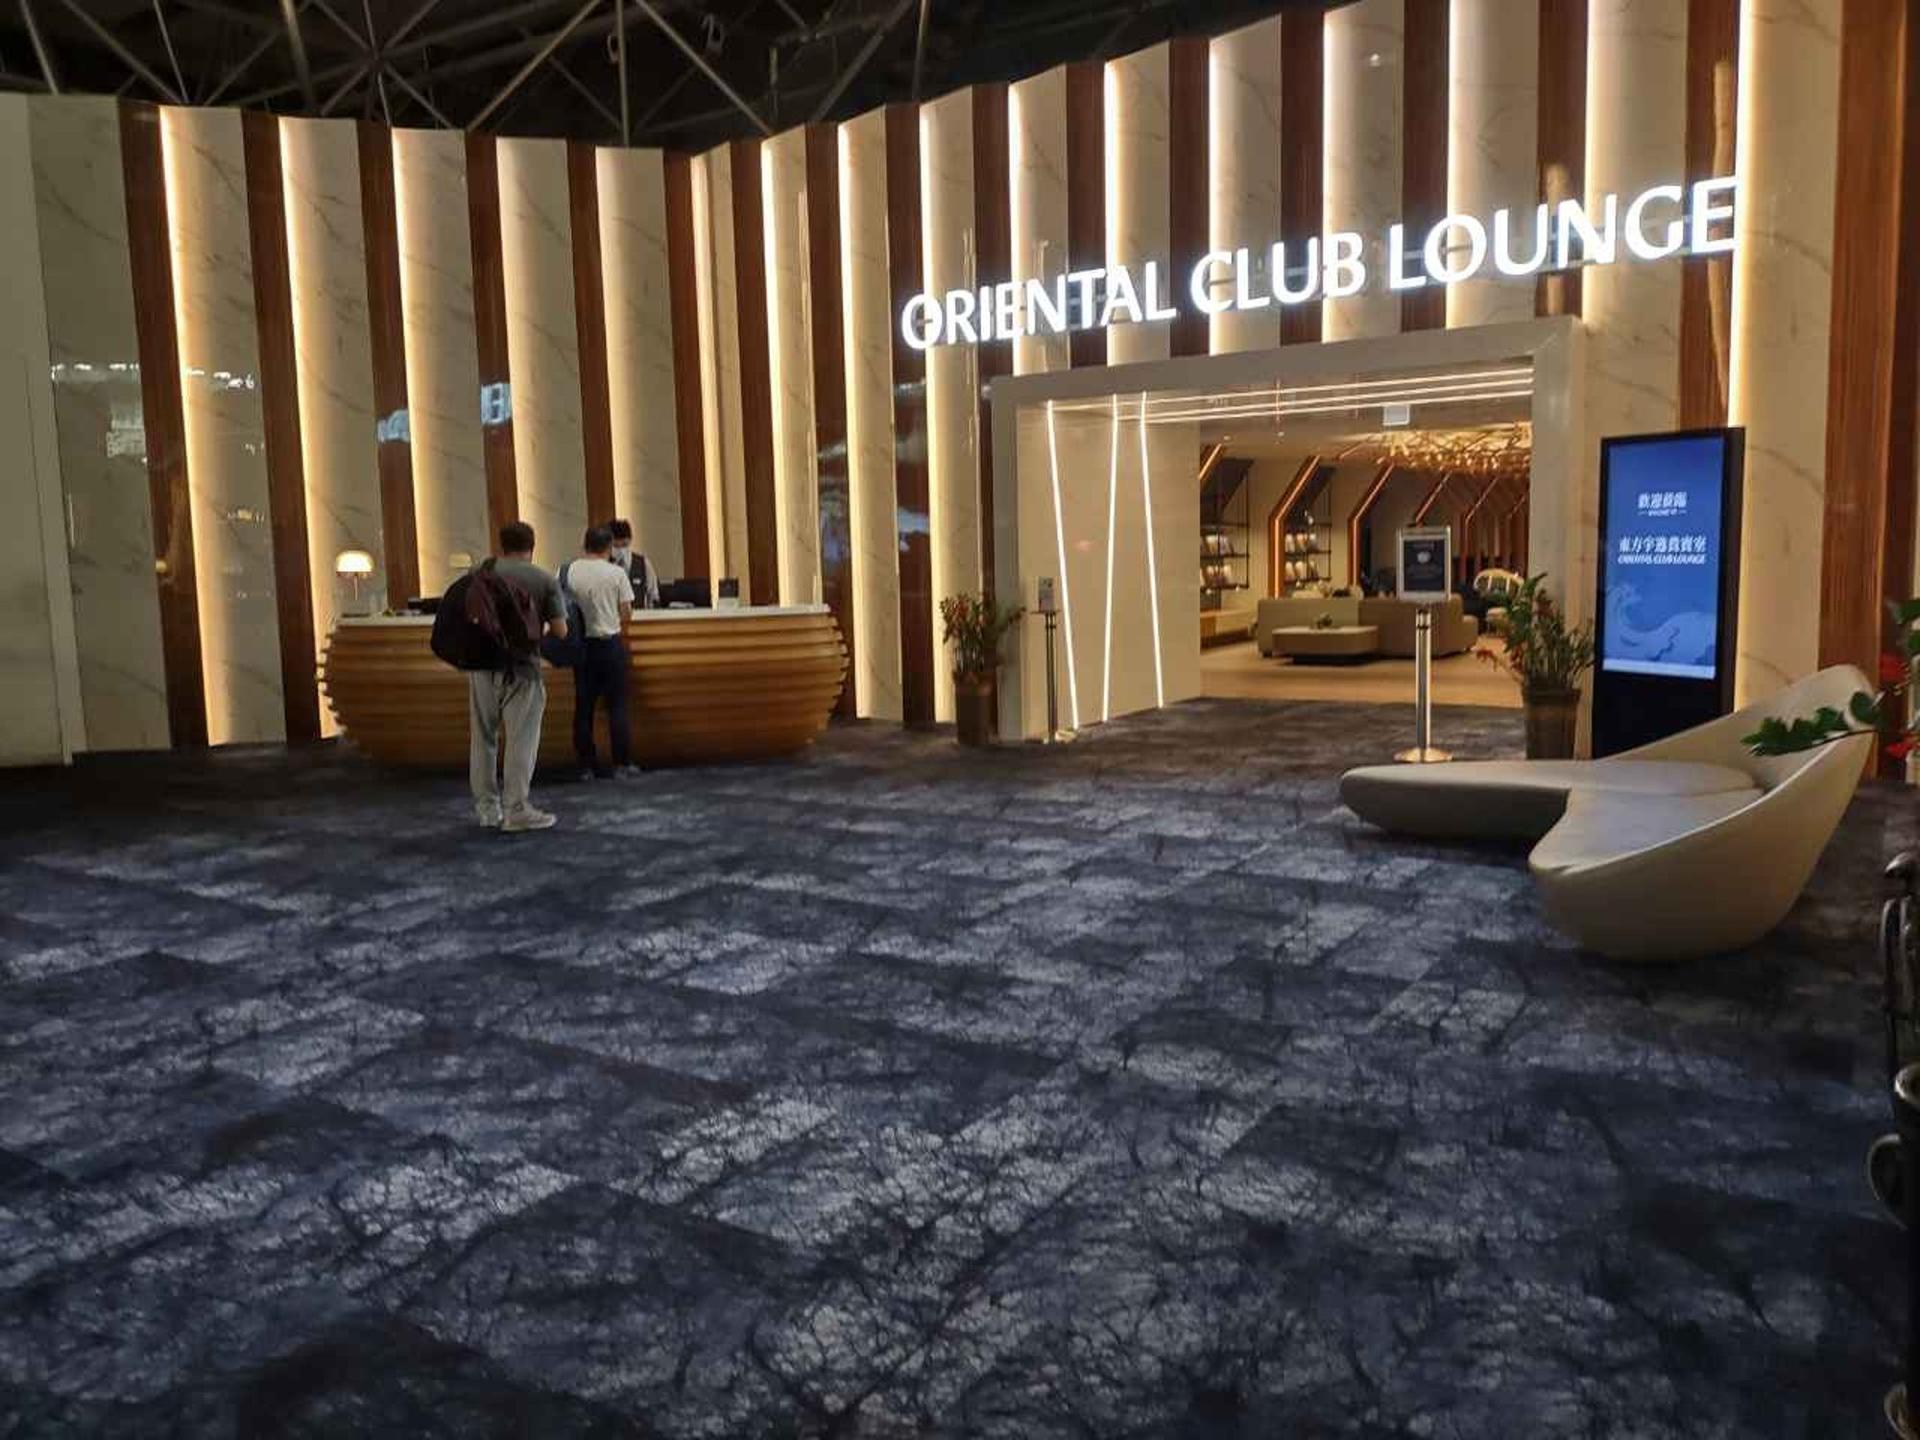 Oriental Club Lounge image 6 of 44